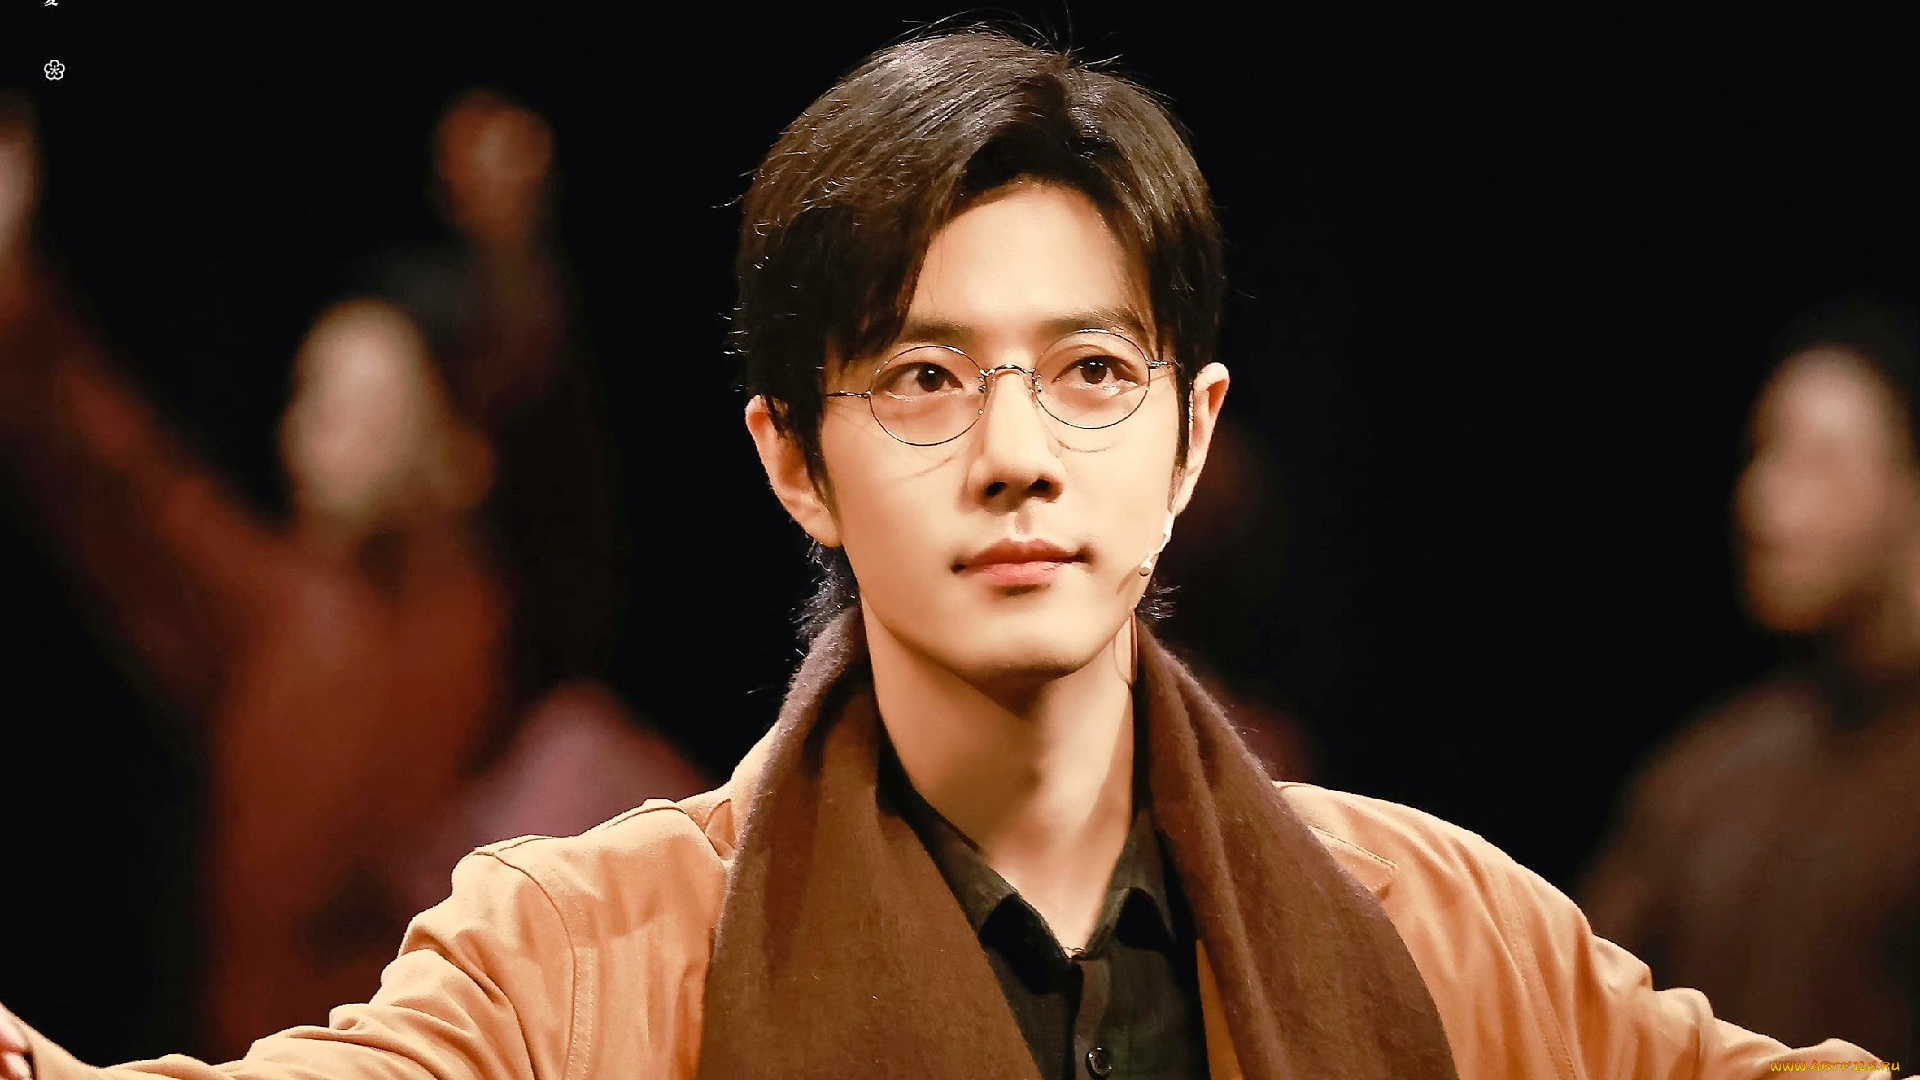 мужчины, xiao, zhan, актер, куртка, очки, поклон